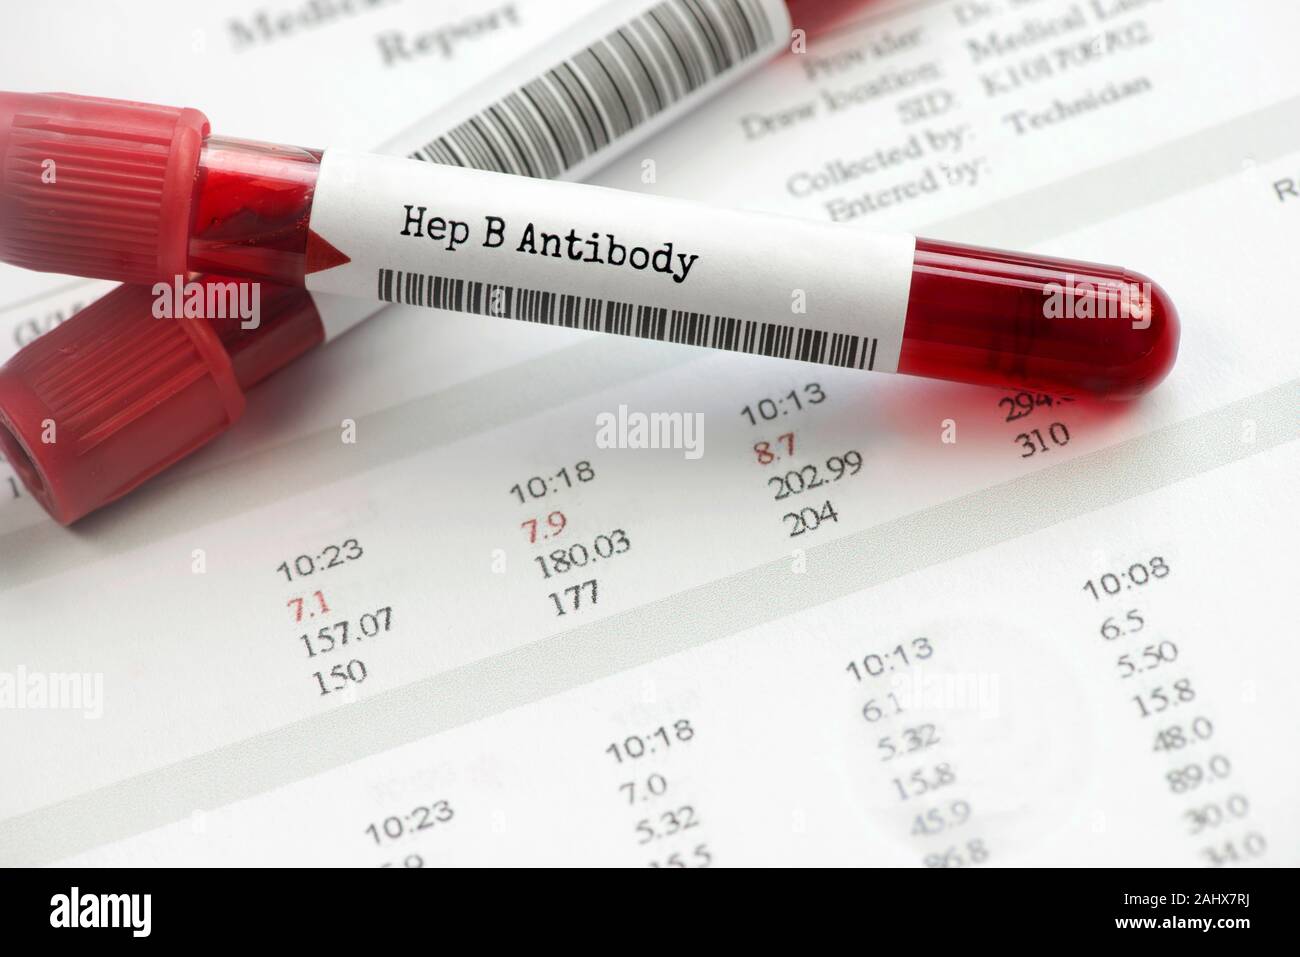 Hepatitis B antibody blood test on laboratory report. Hepatitis B ...